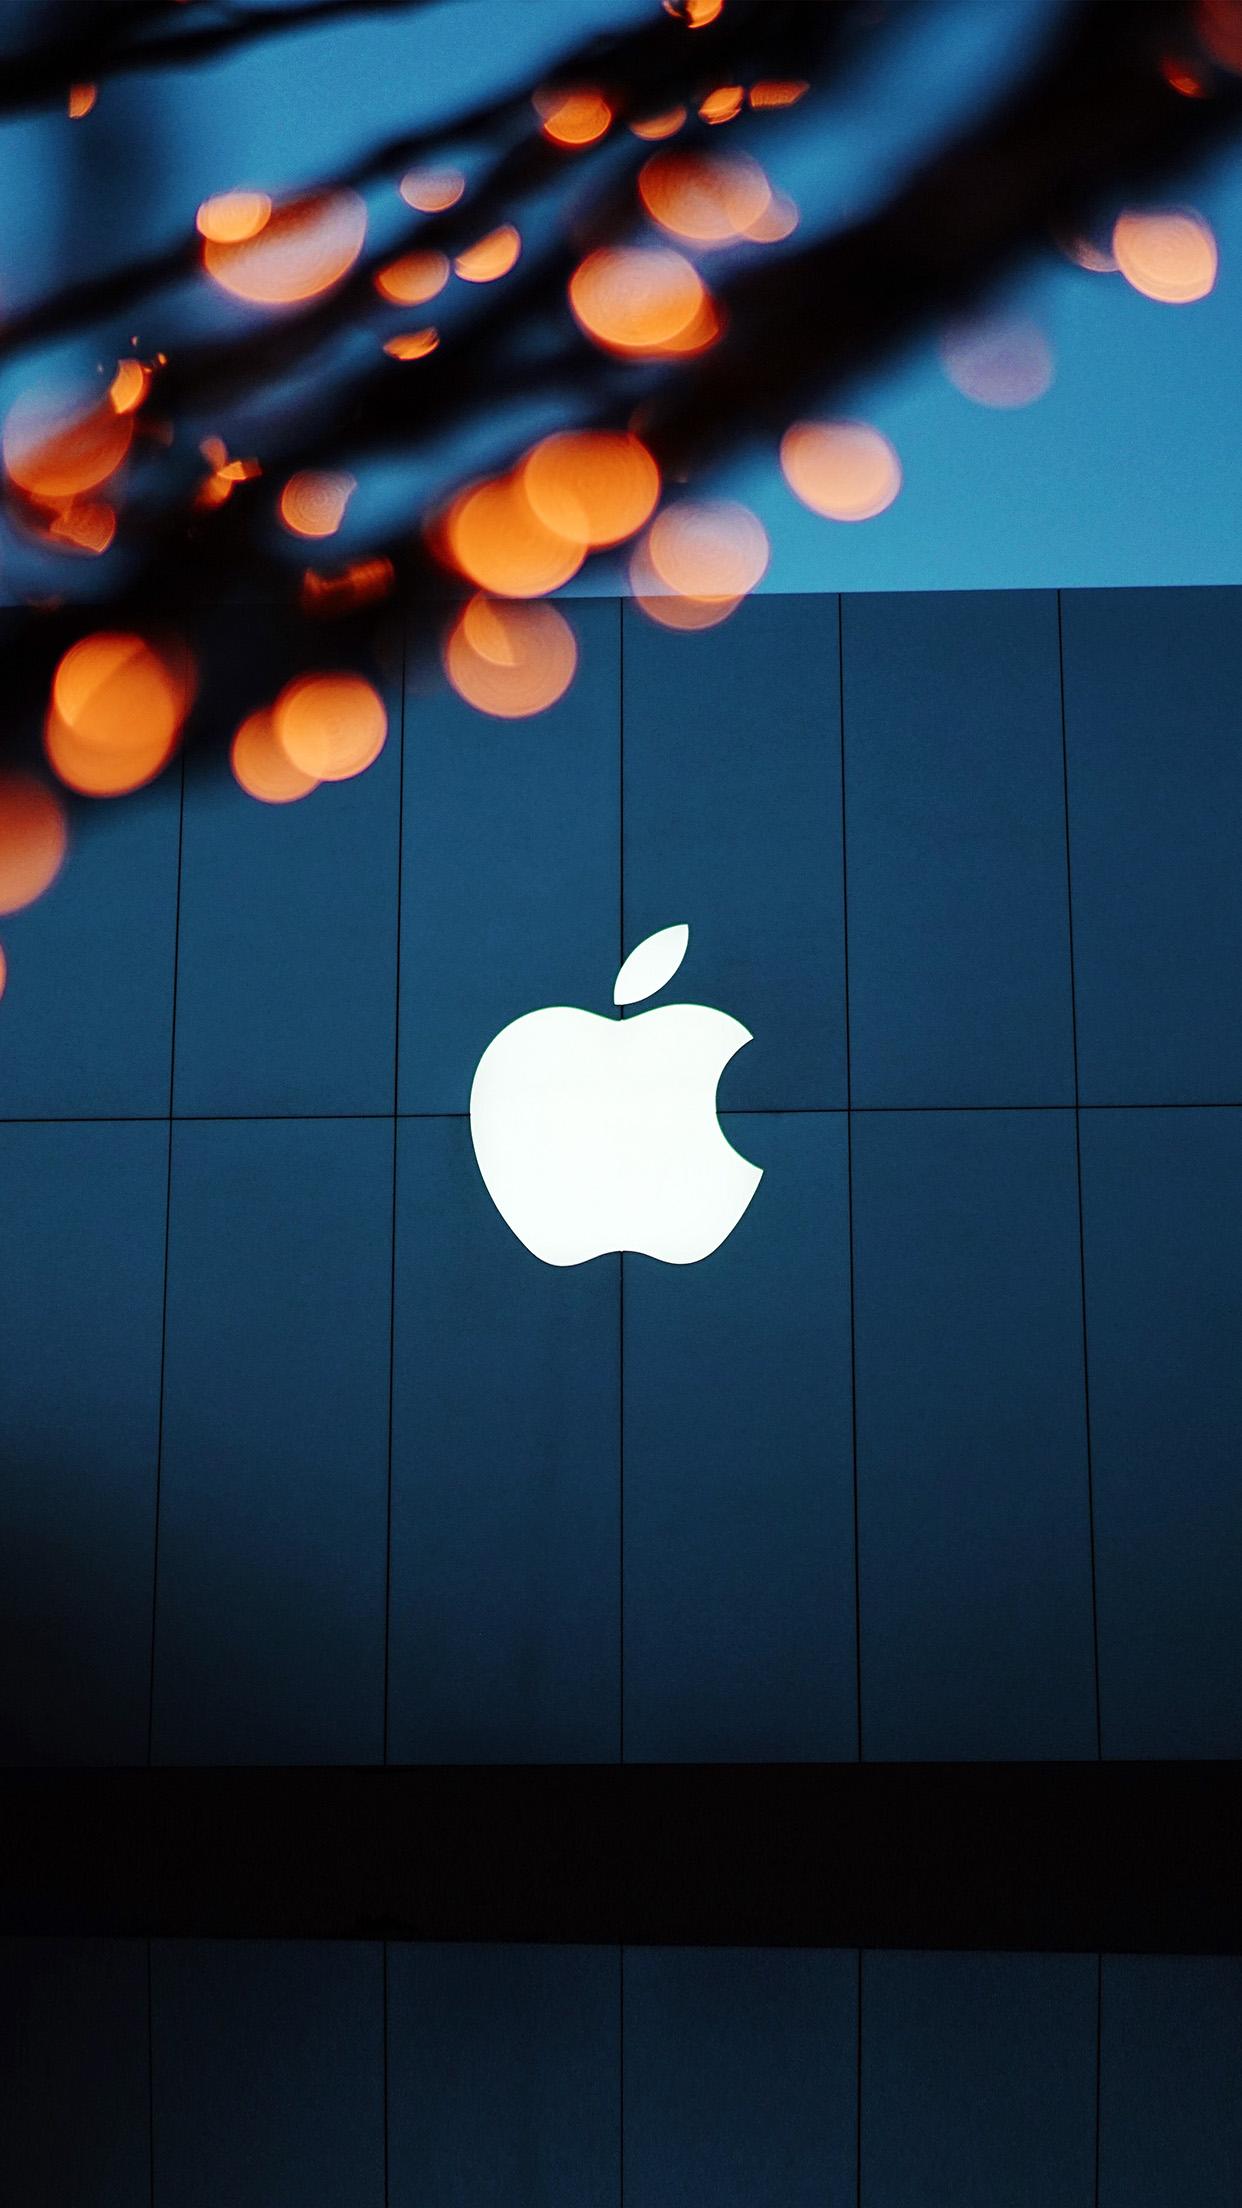 iPhone 6 wallpaper. apple logo